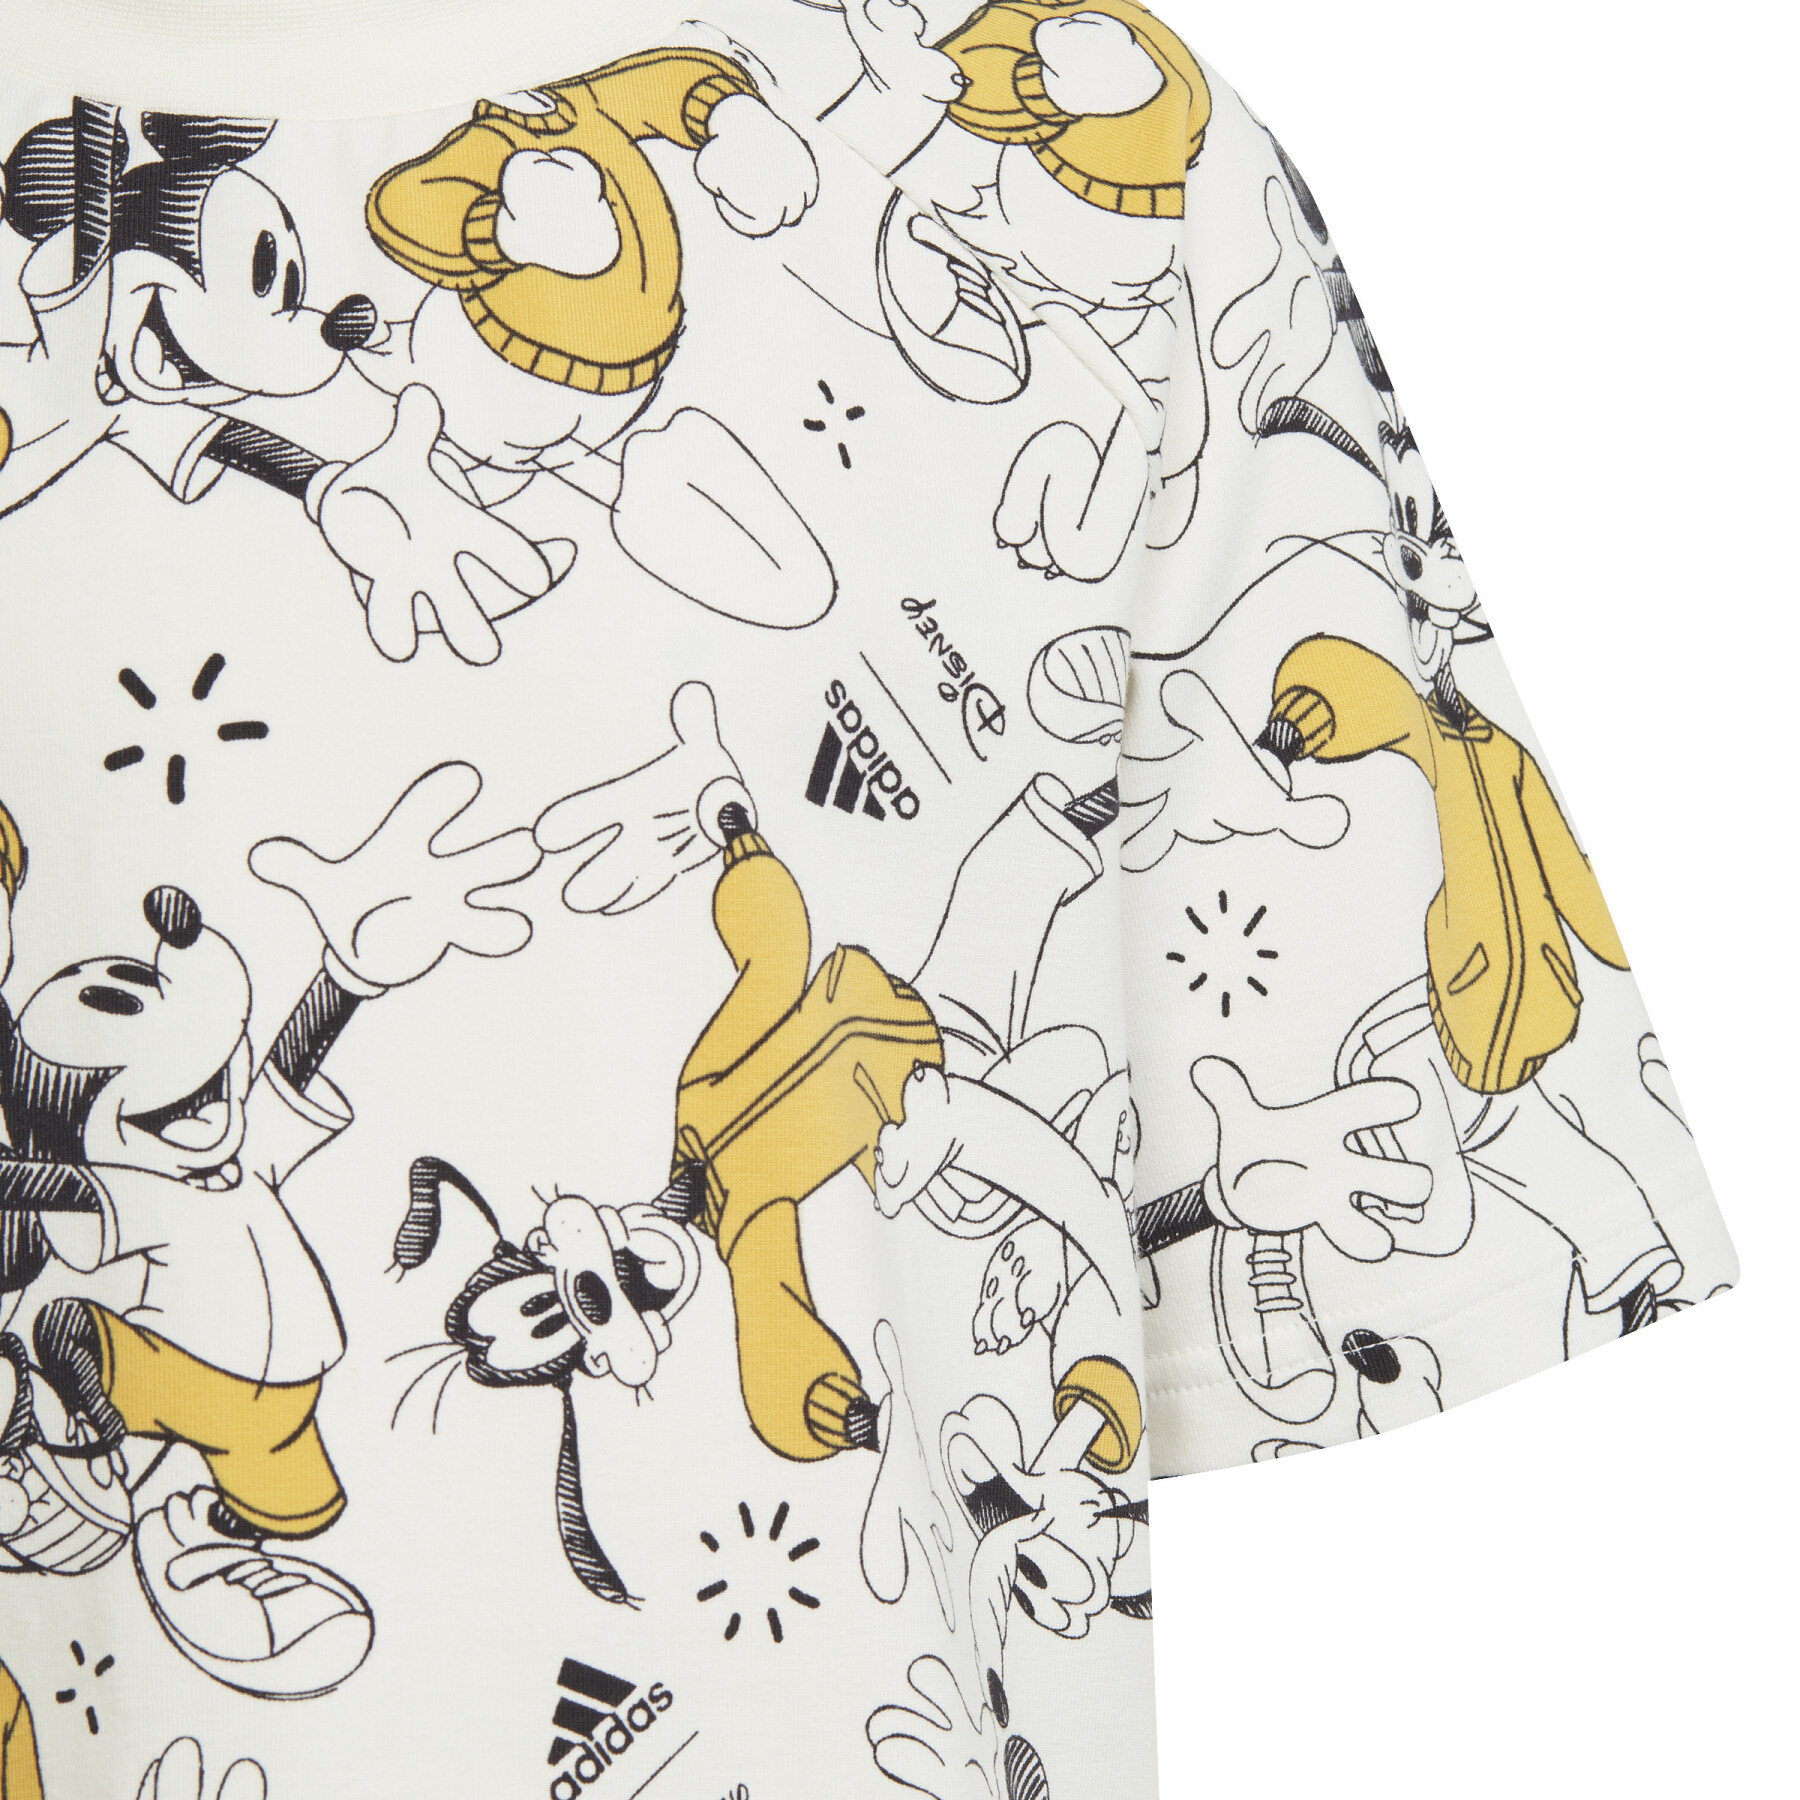 Kinder T-Shirt adidas Disney Mickey Mouse